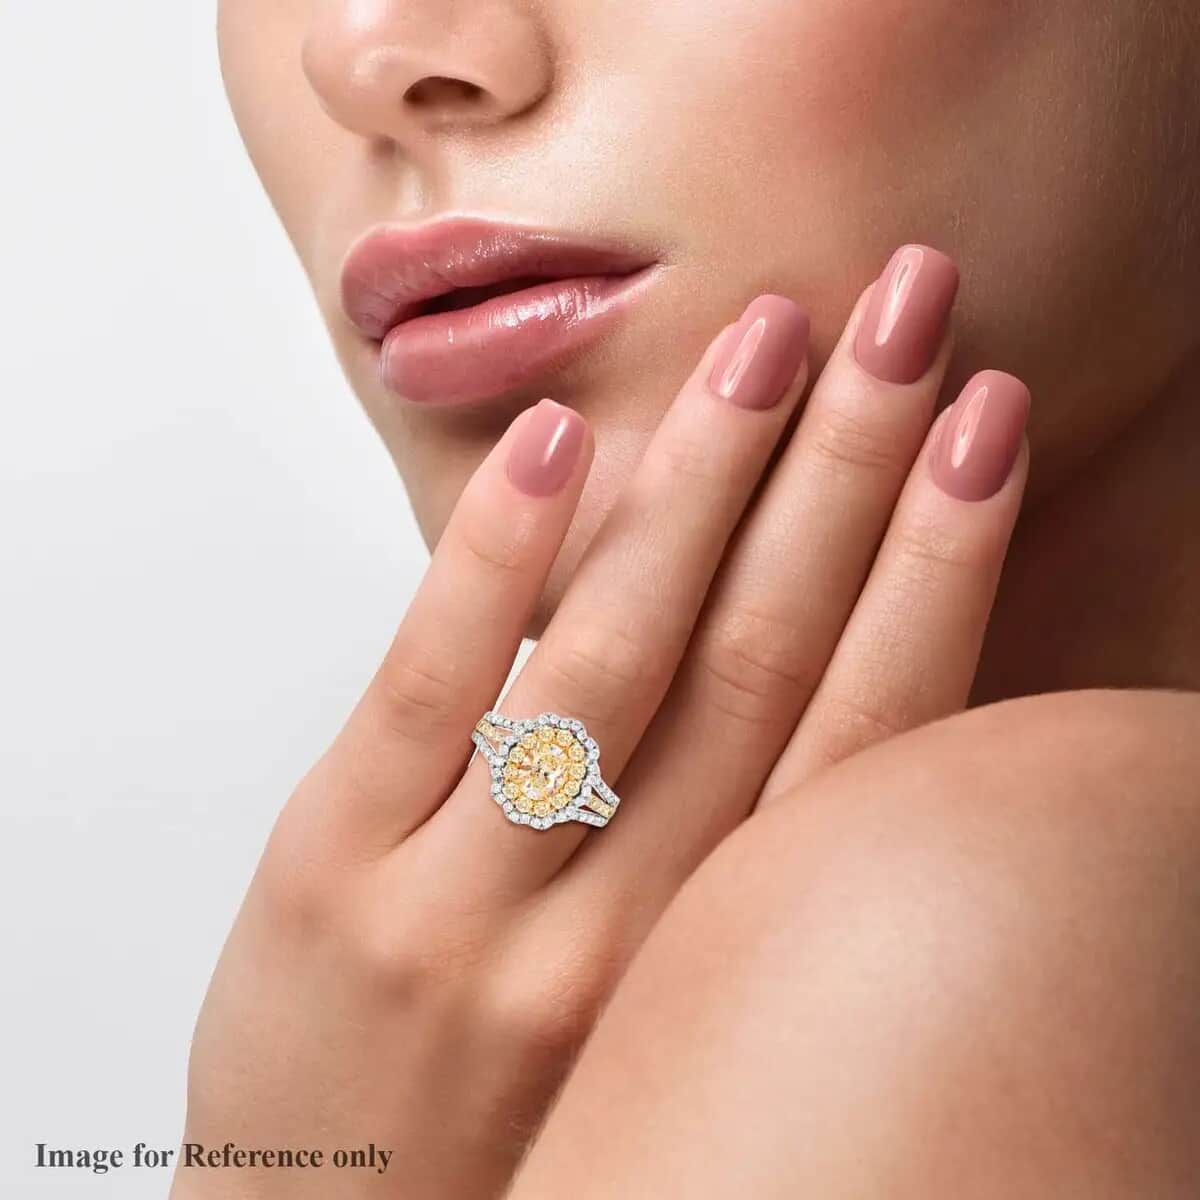 Modani Natural SI Yellow Diamond Ring , White Diamond Accent Ring, Diamond Floral Cluster Ring, 18K Yellow and White Gold Ring, Diamond Jewelry For Her 6.60 Grams 2.15 ctw (Size 7.0) image number 5